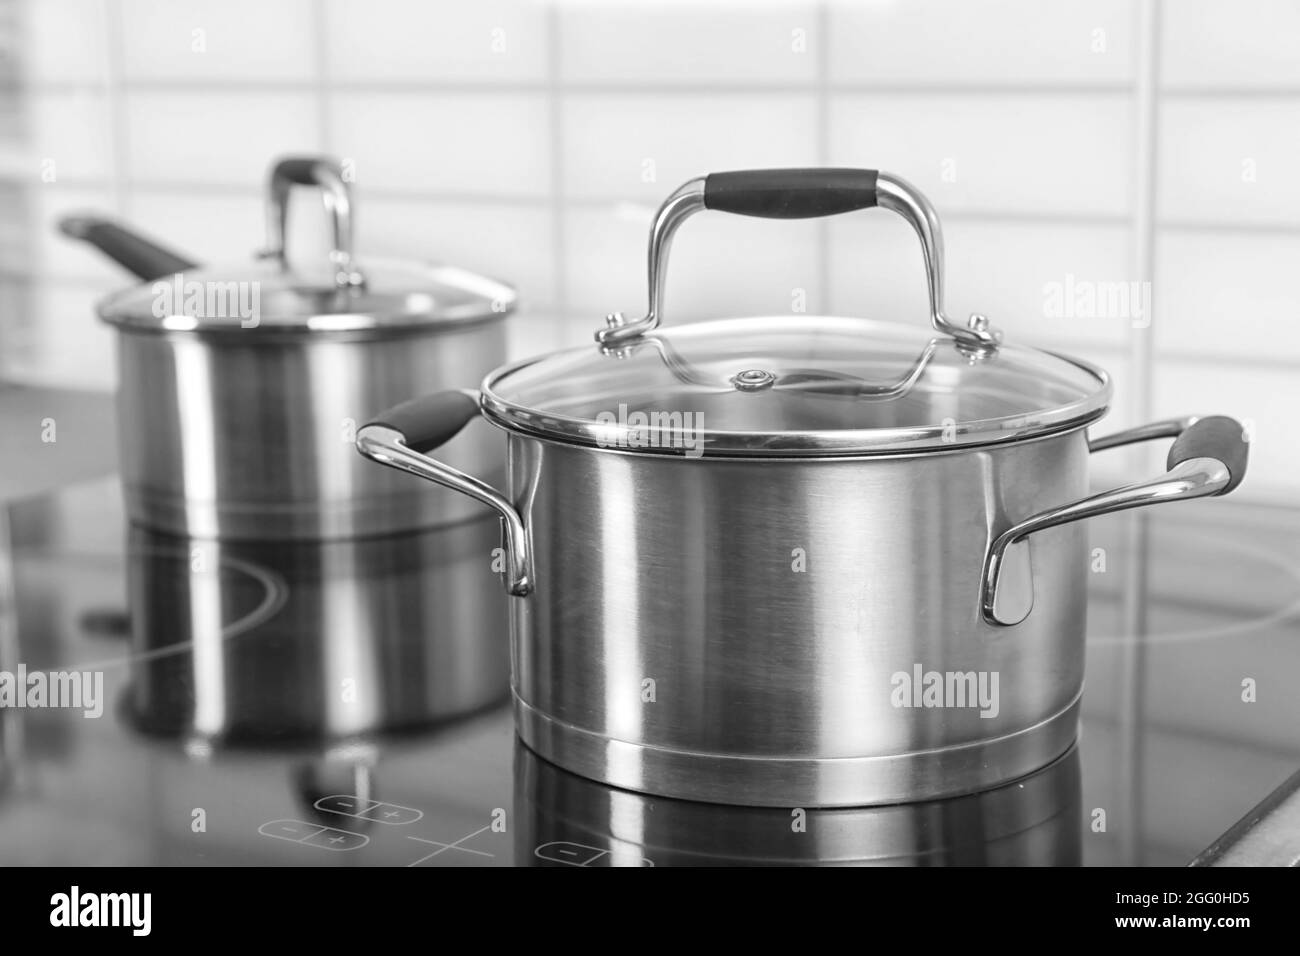 metal-saucepan-on-electric-stove-in-kitchen-stock-photo-alamy